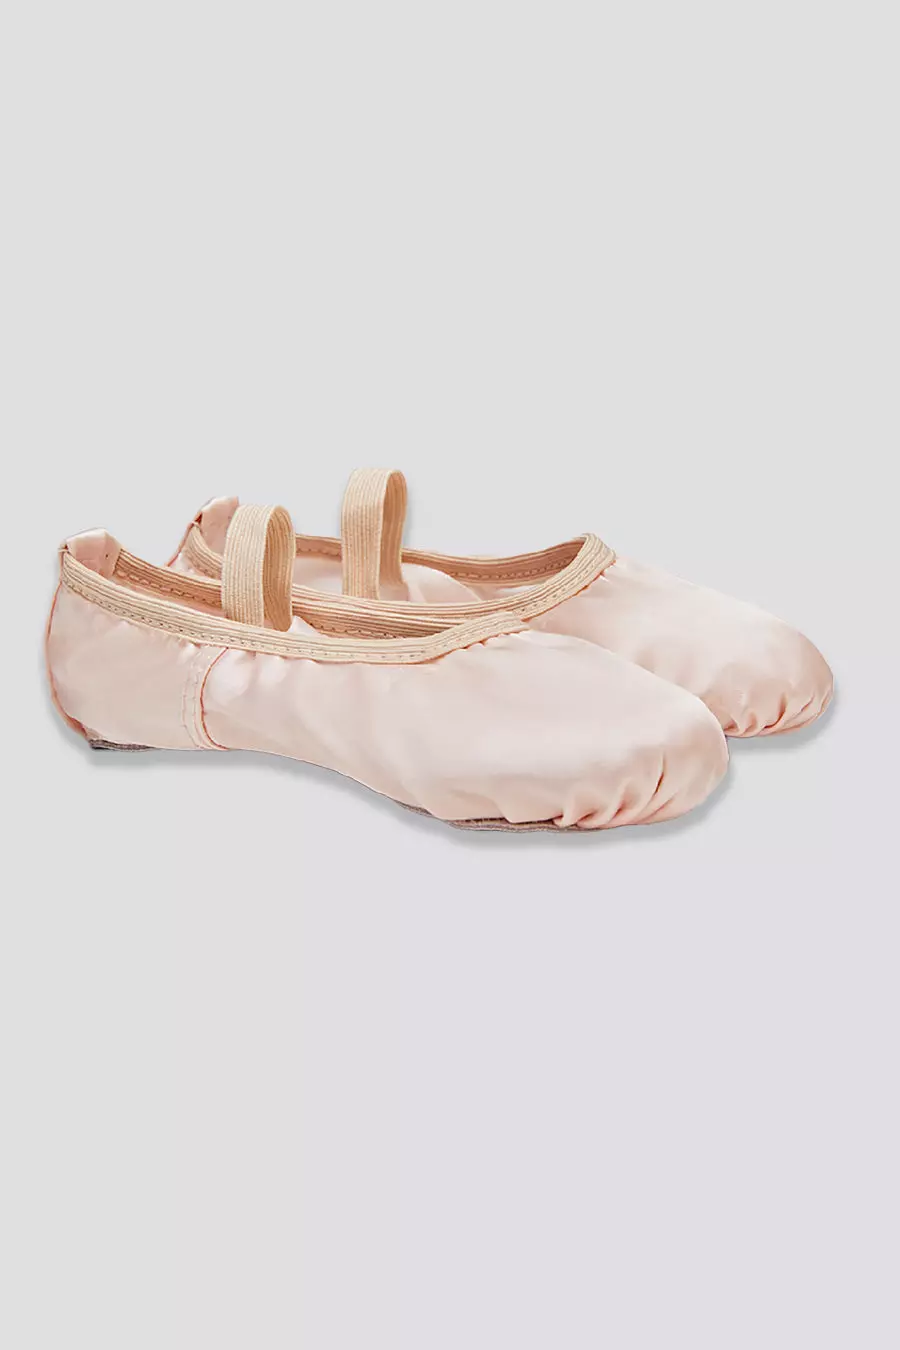 Stelle Girls Ballet Practice Shoes